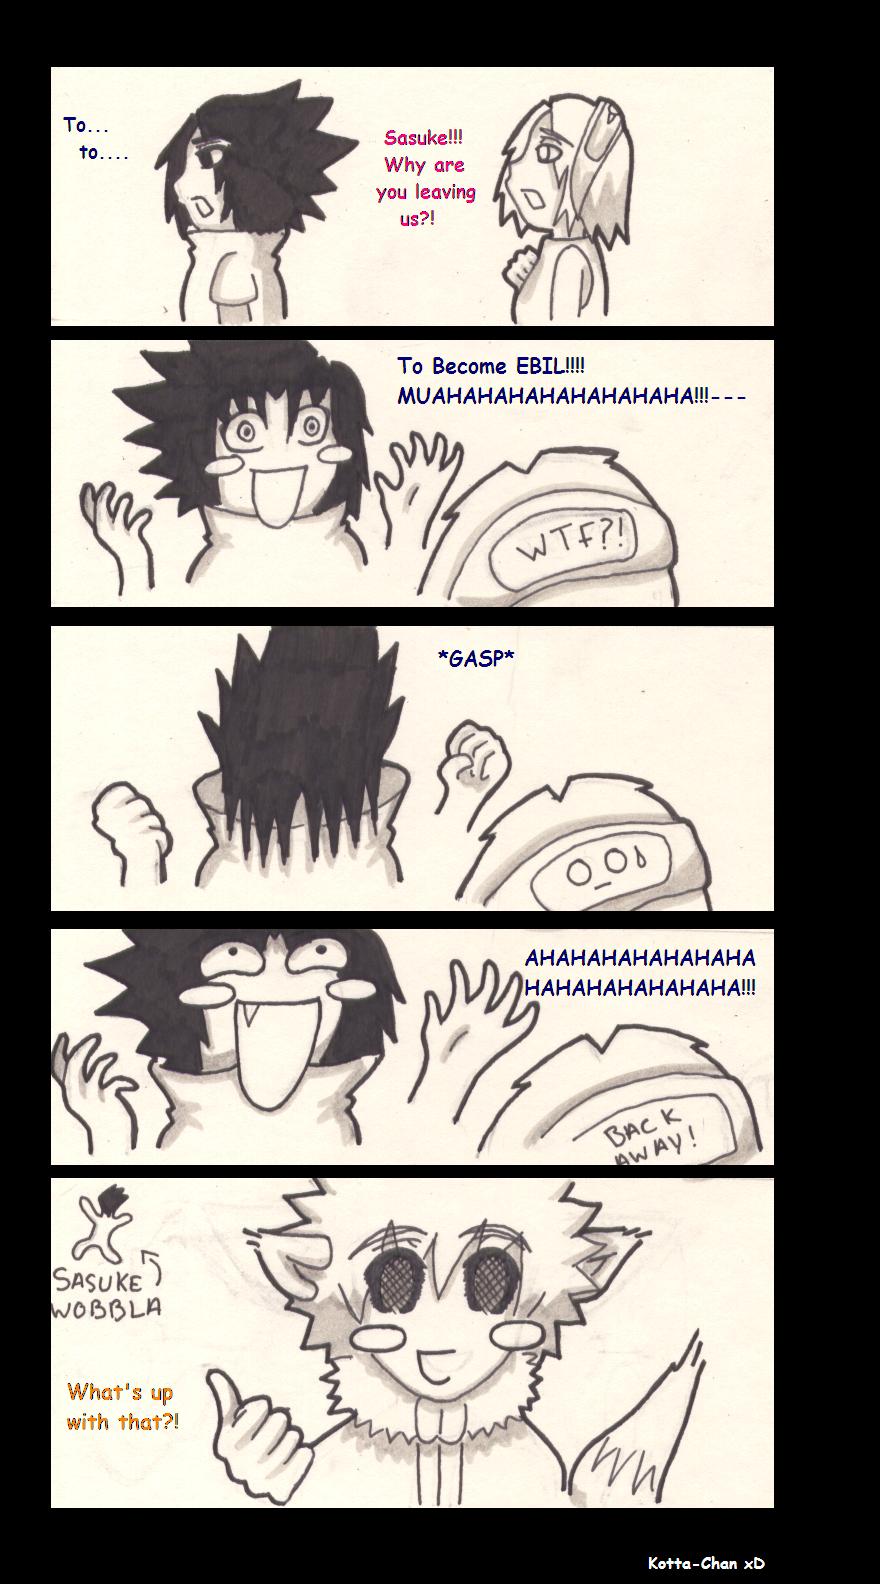 Why Sasuke? by KottaChan